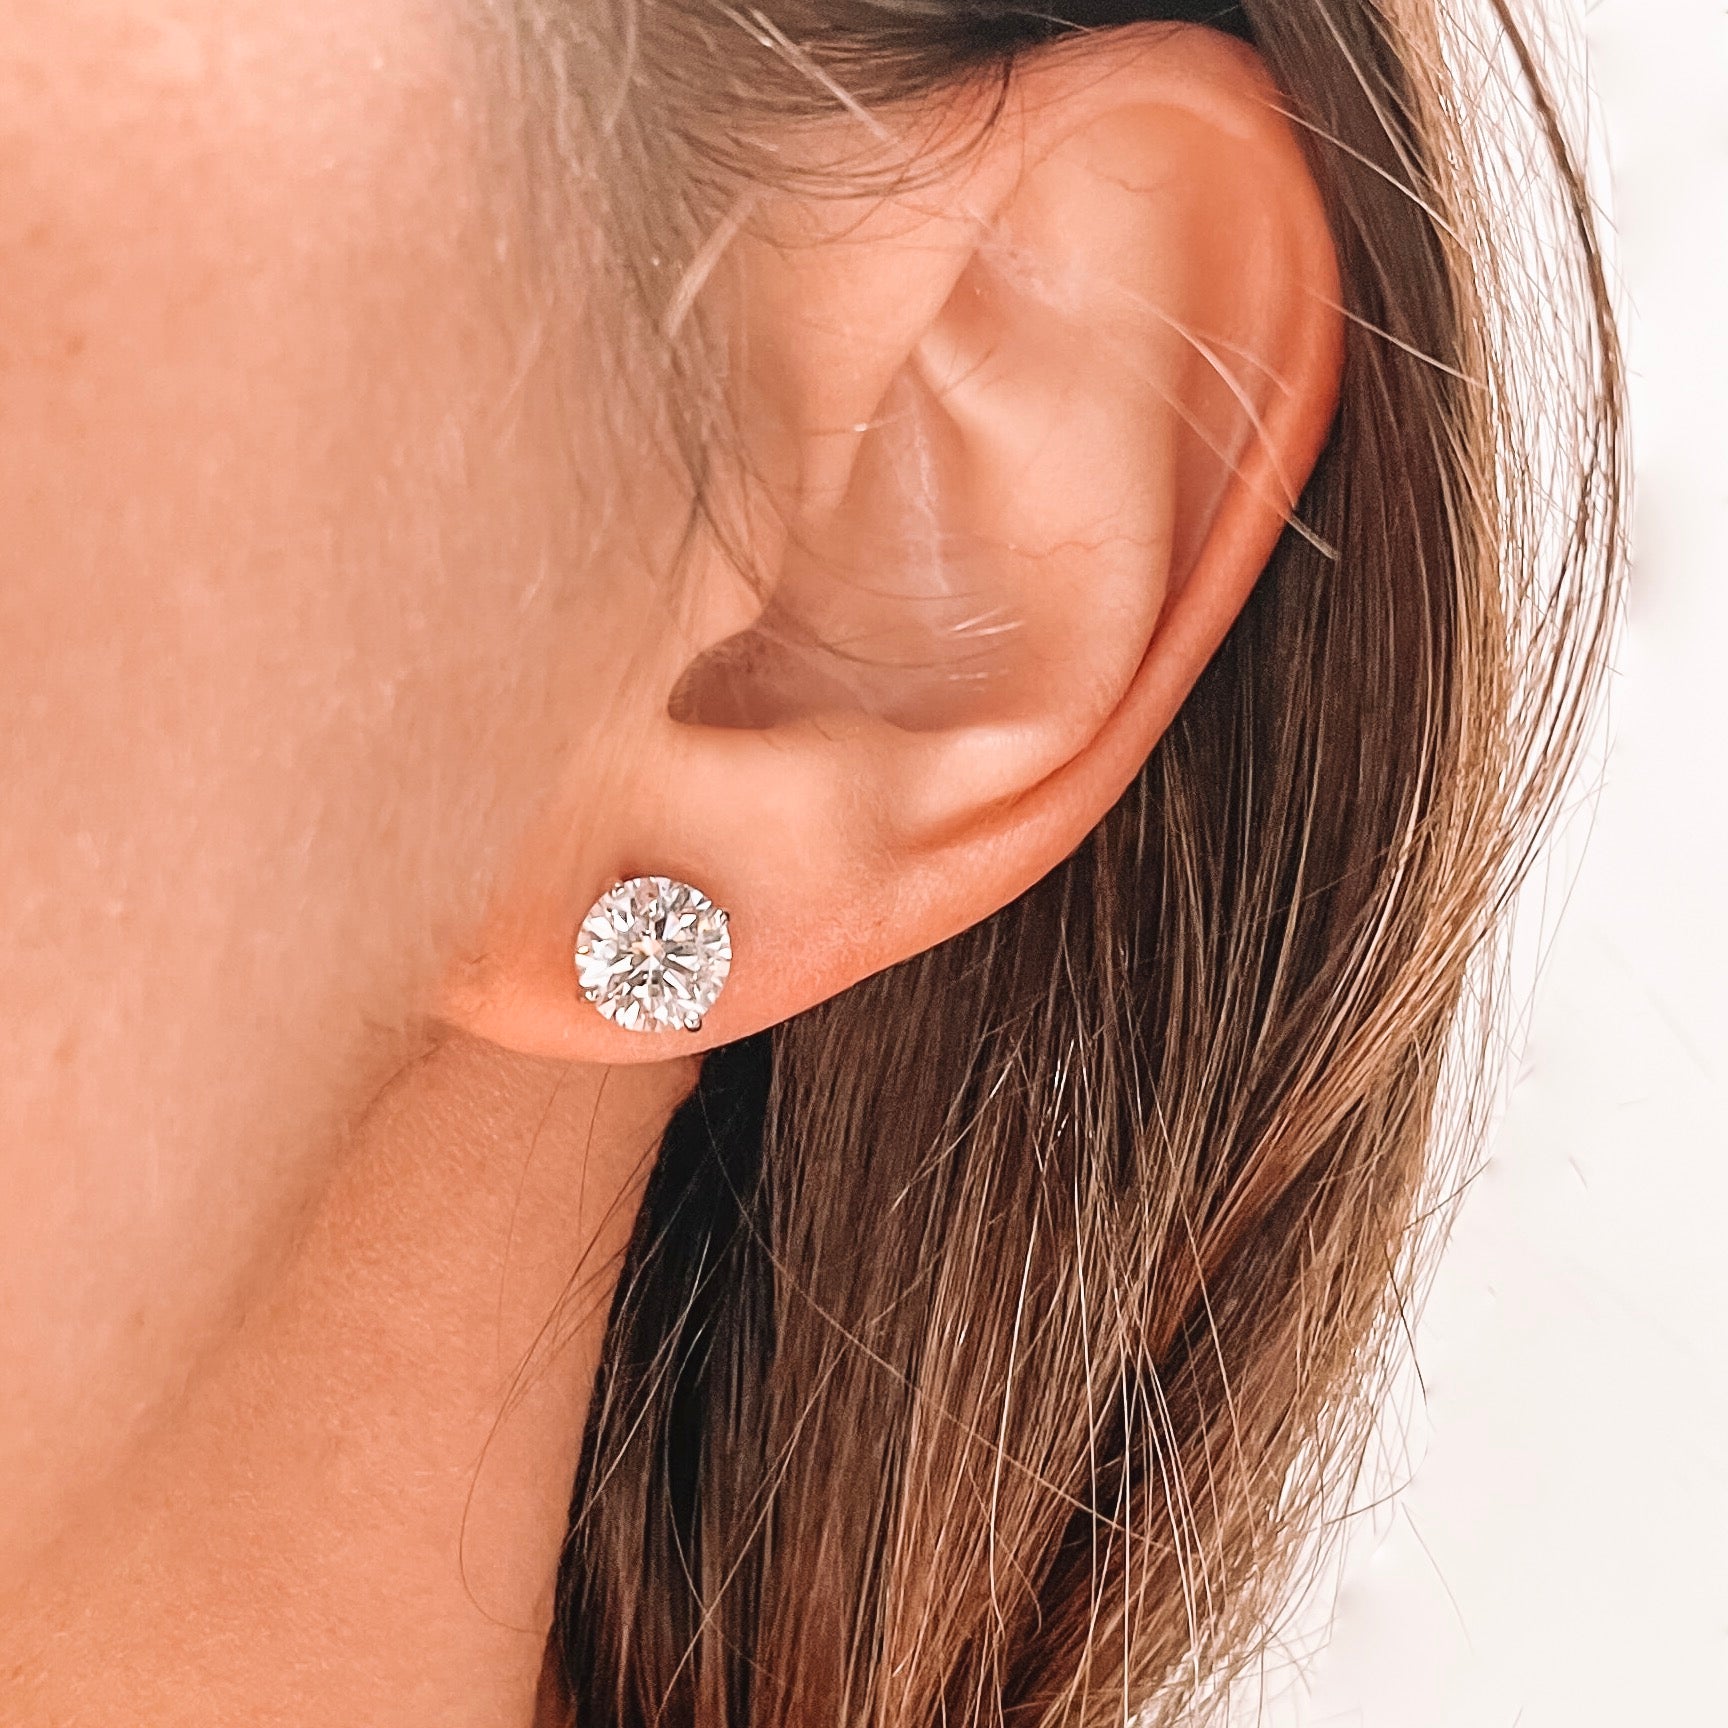 2.07 Carat Total Weight Round Diamond Stud Earrings (j-k, Vvs1-vvs2, GIA)